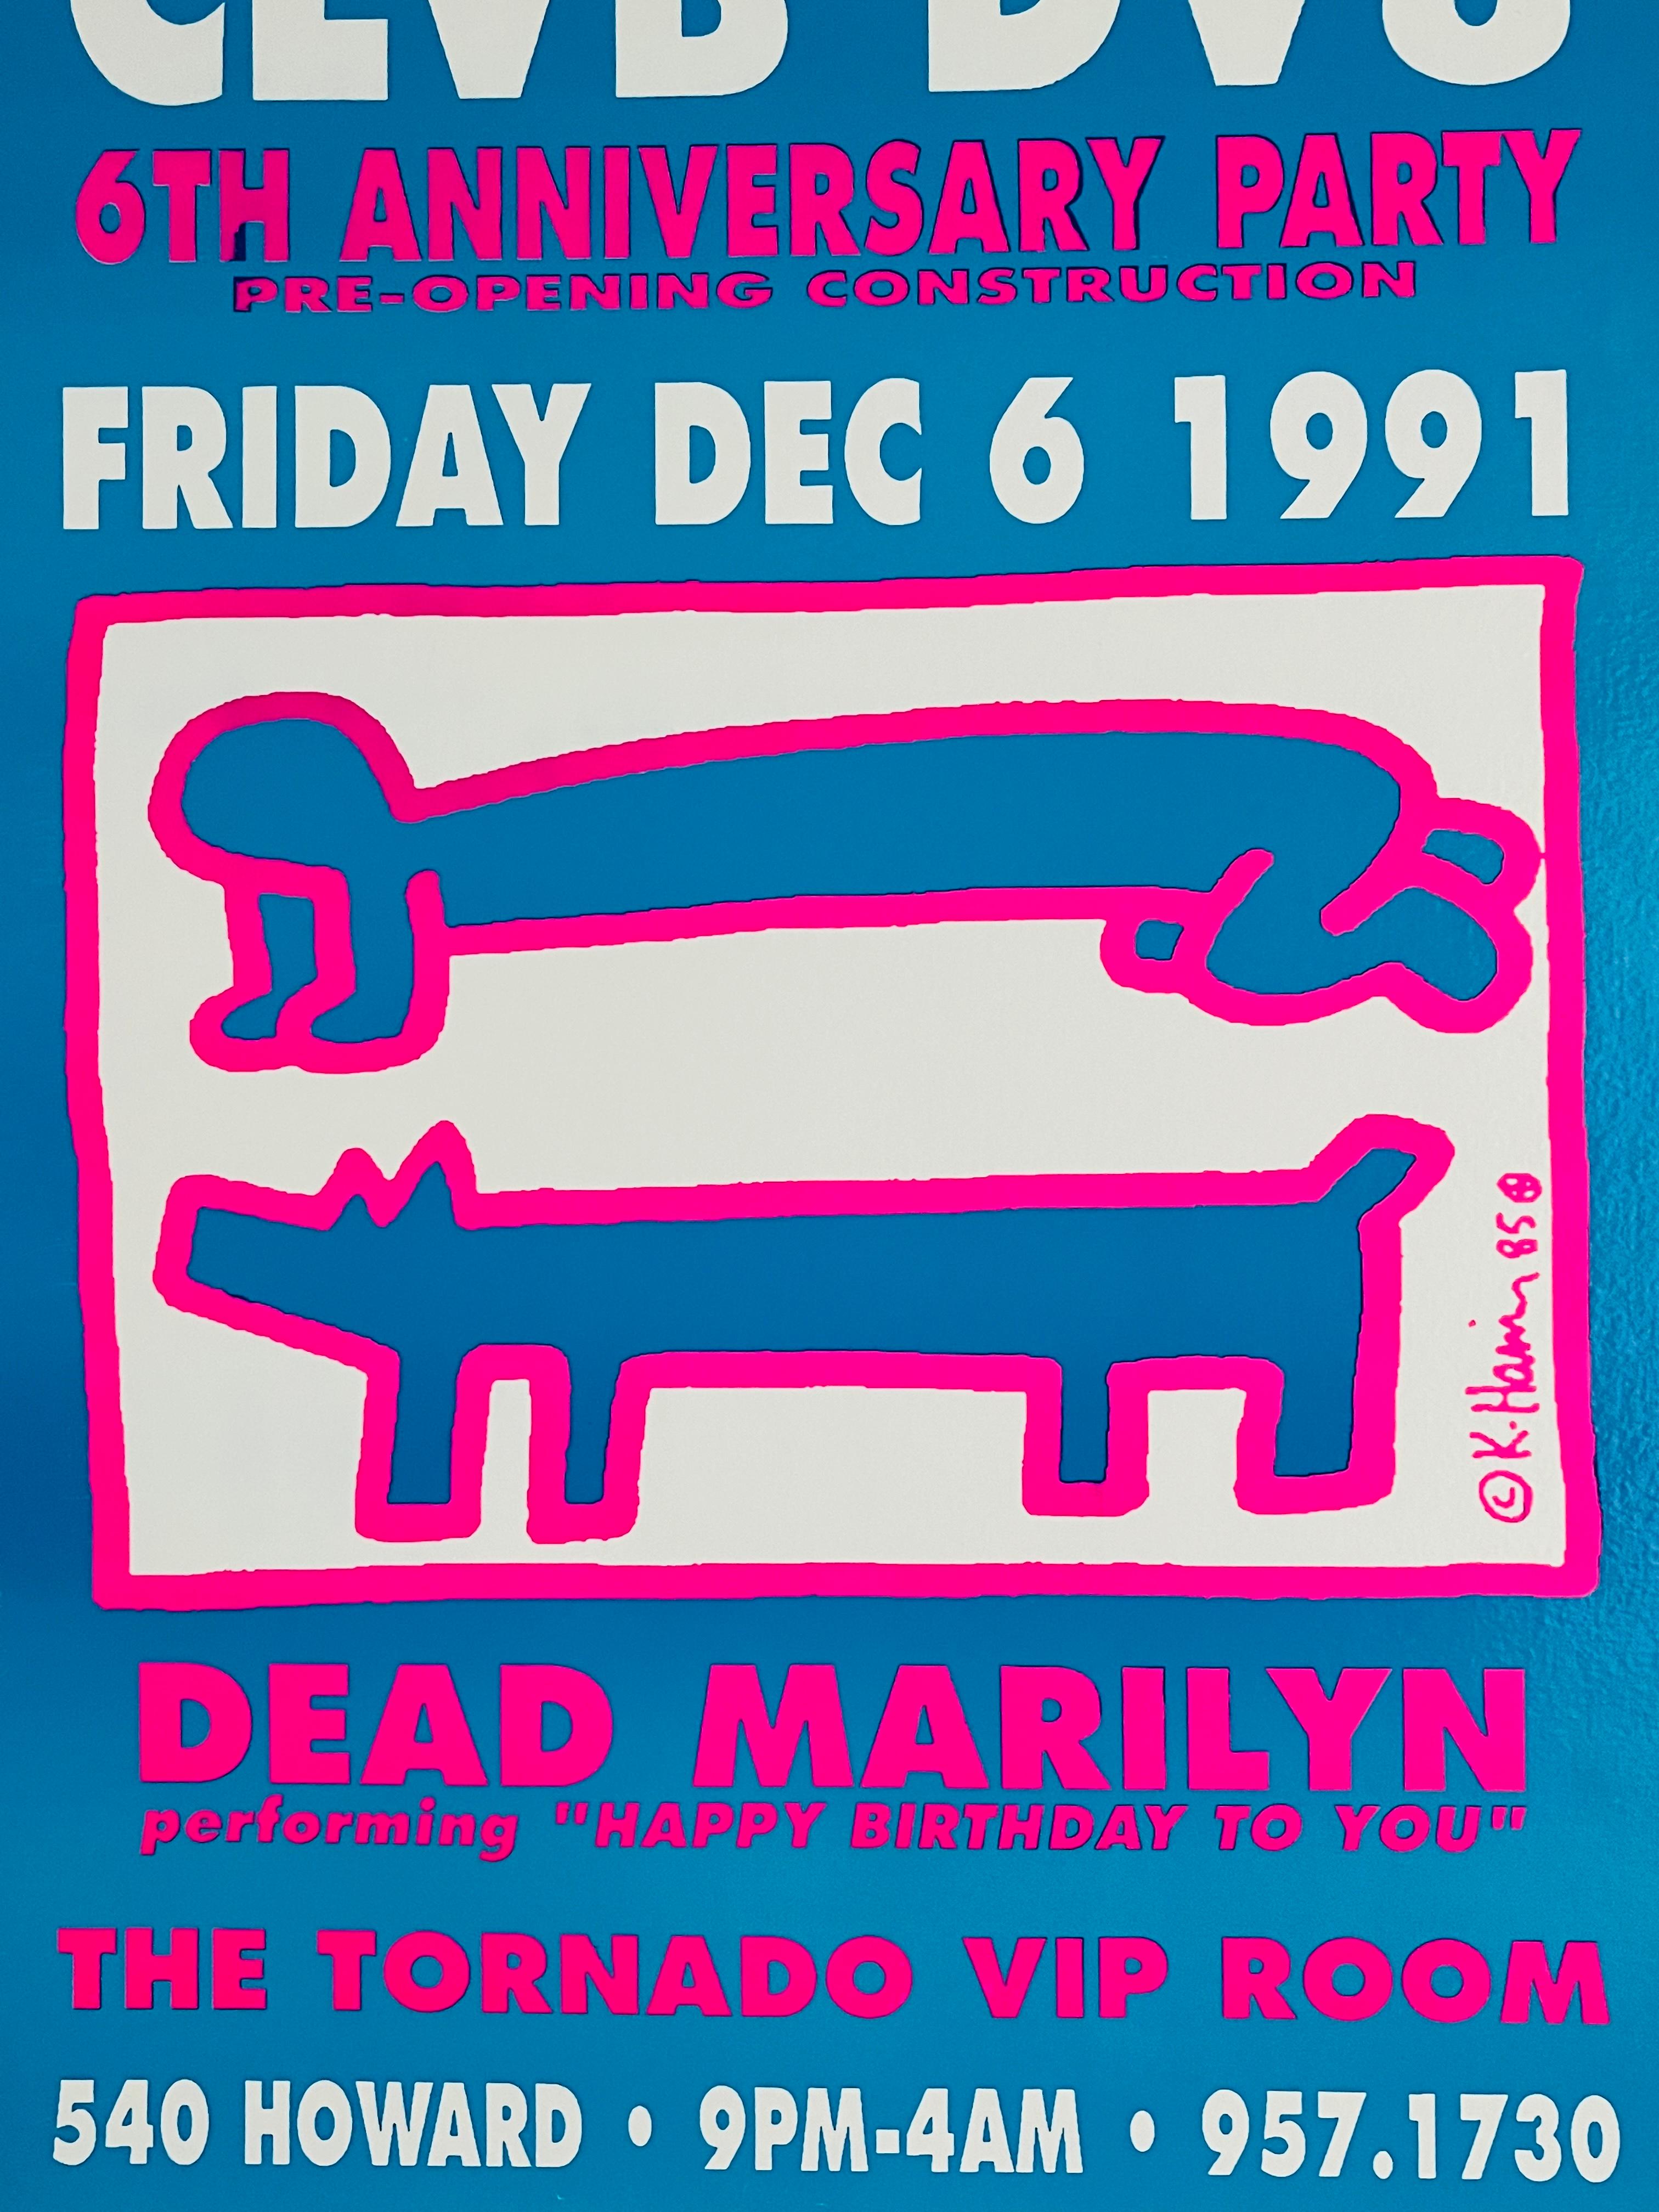 Keith Haring Club DV8 poster 1991 (Keith Haring balloon dog) - Pop Art Print by (after) Keith Haring